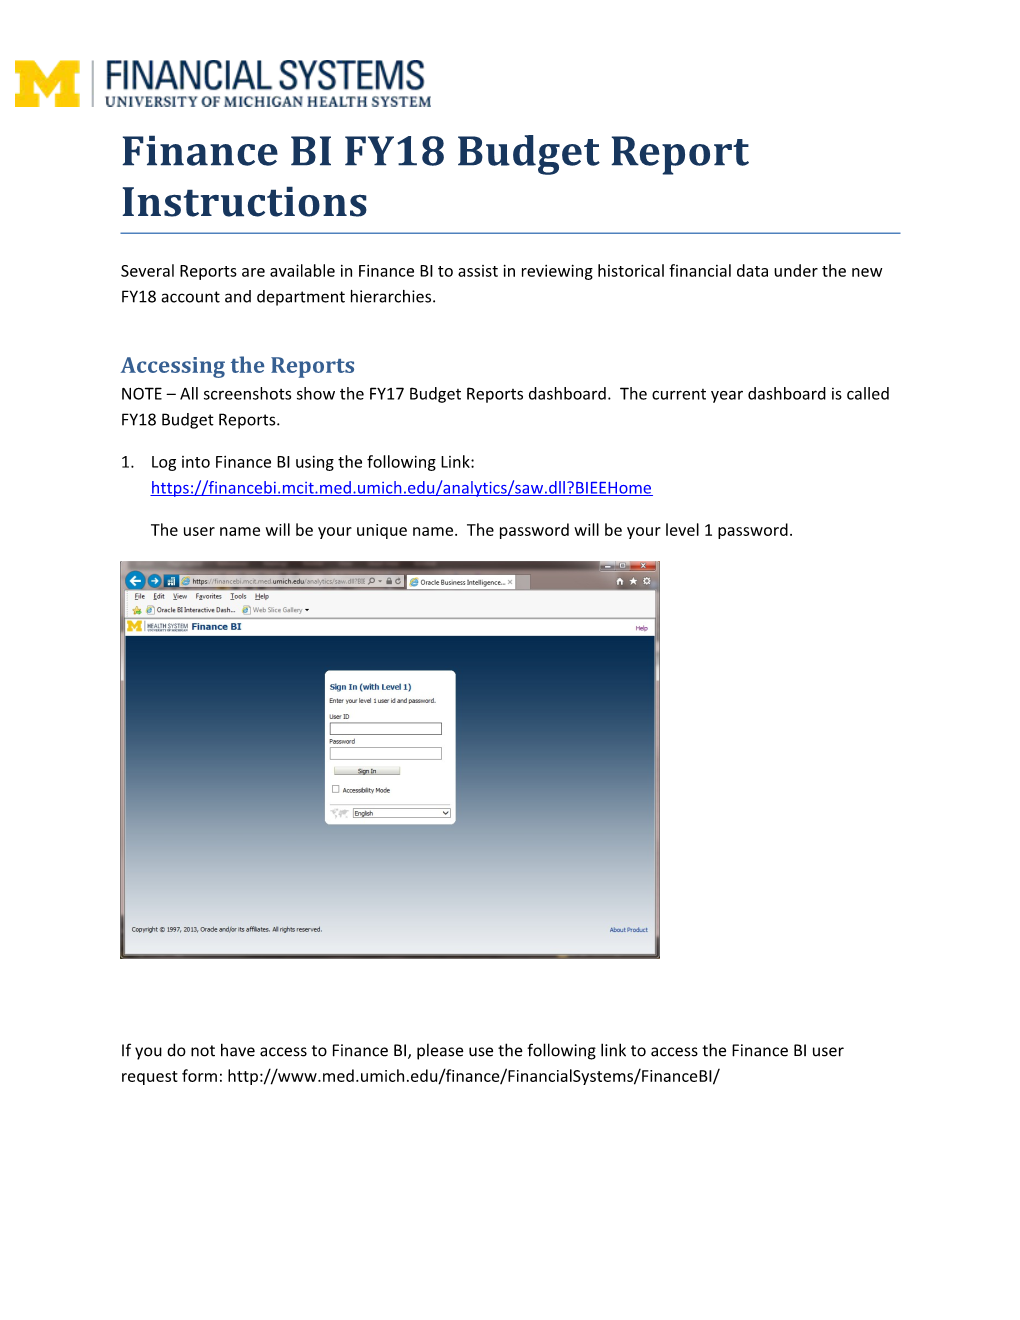 Finance BI FY18 Budget Report Instructions